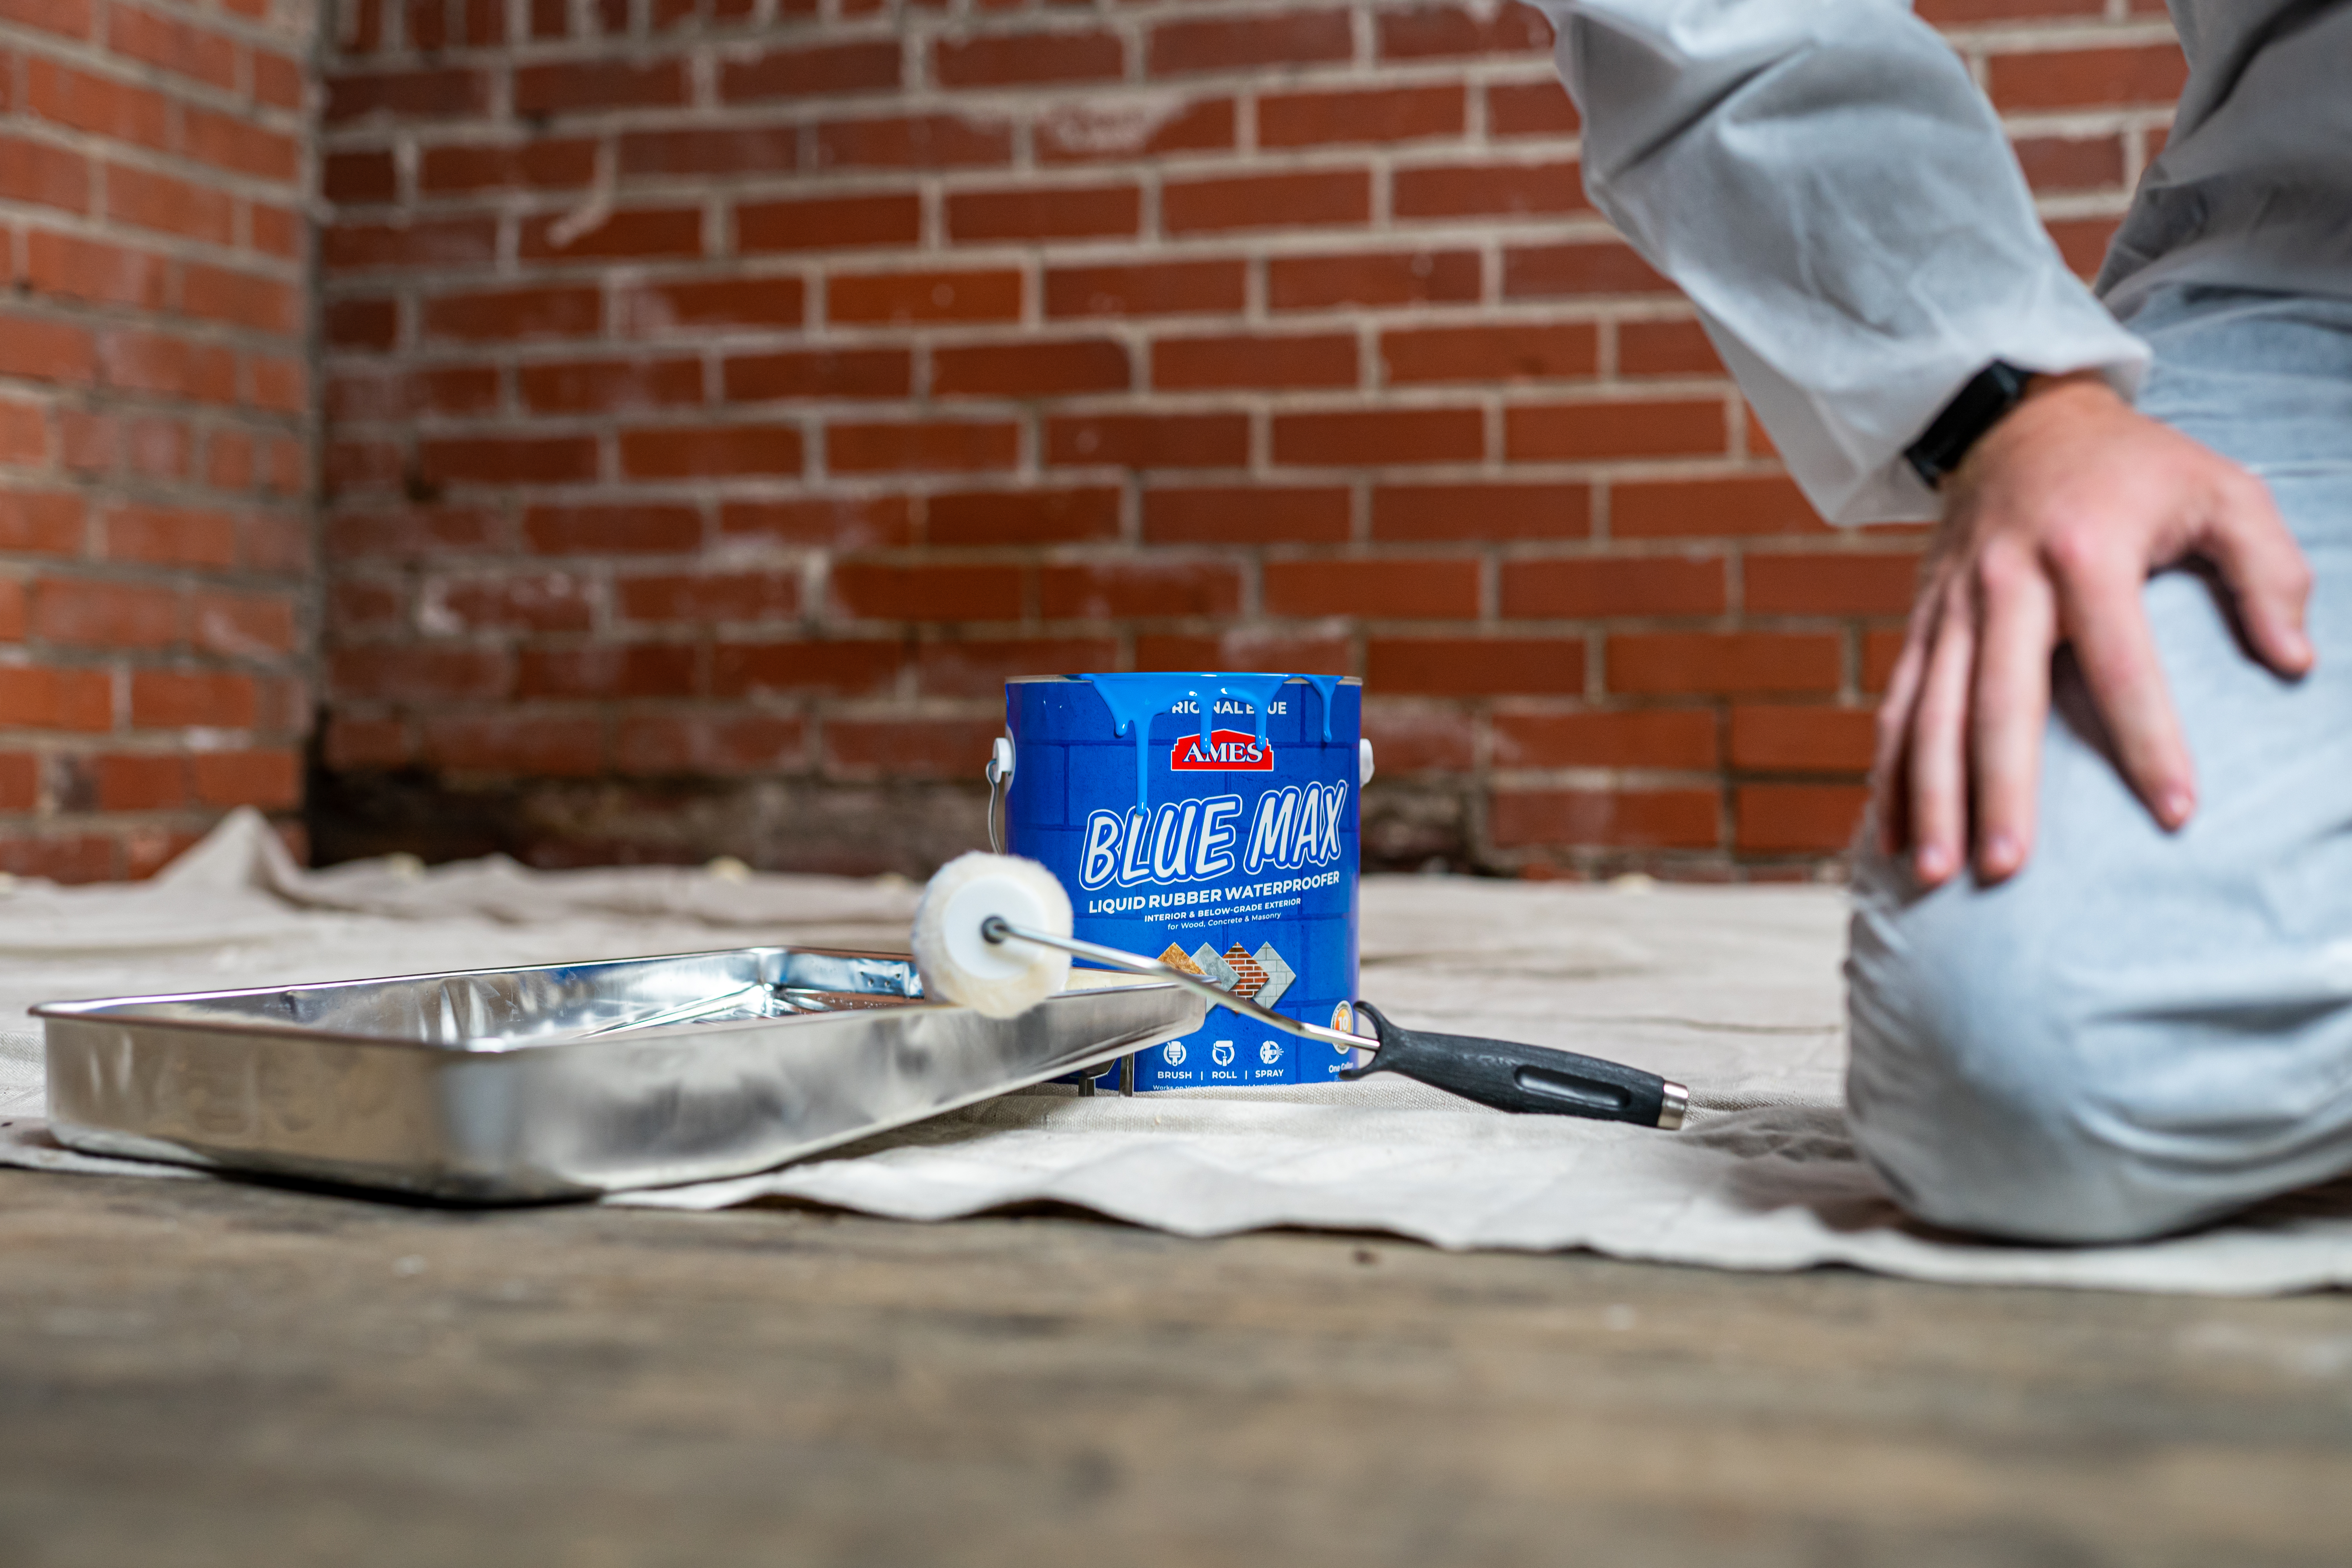 Blue Max Liquid Rubber Waterproof Sealant